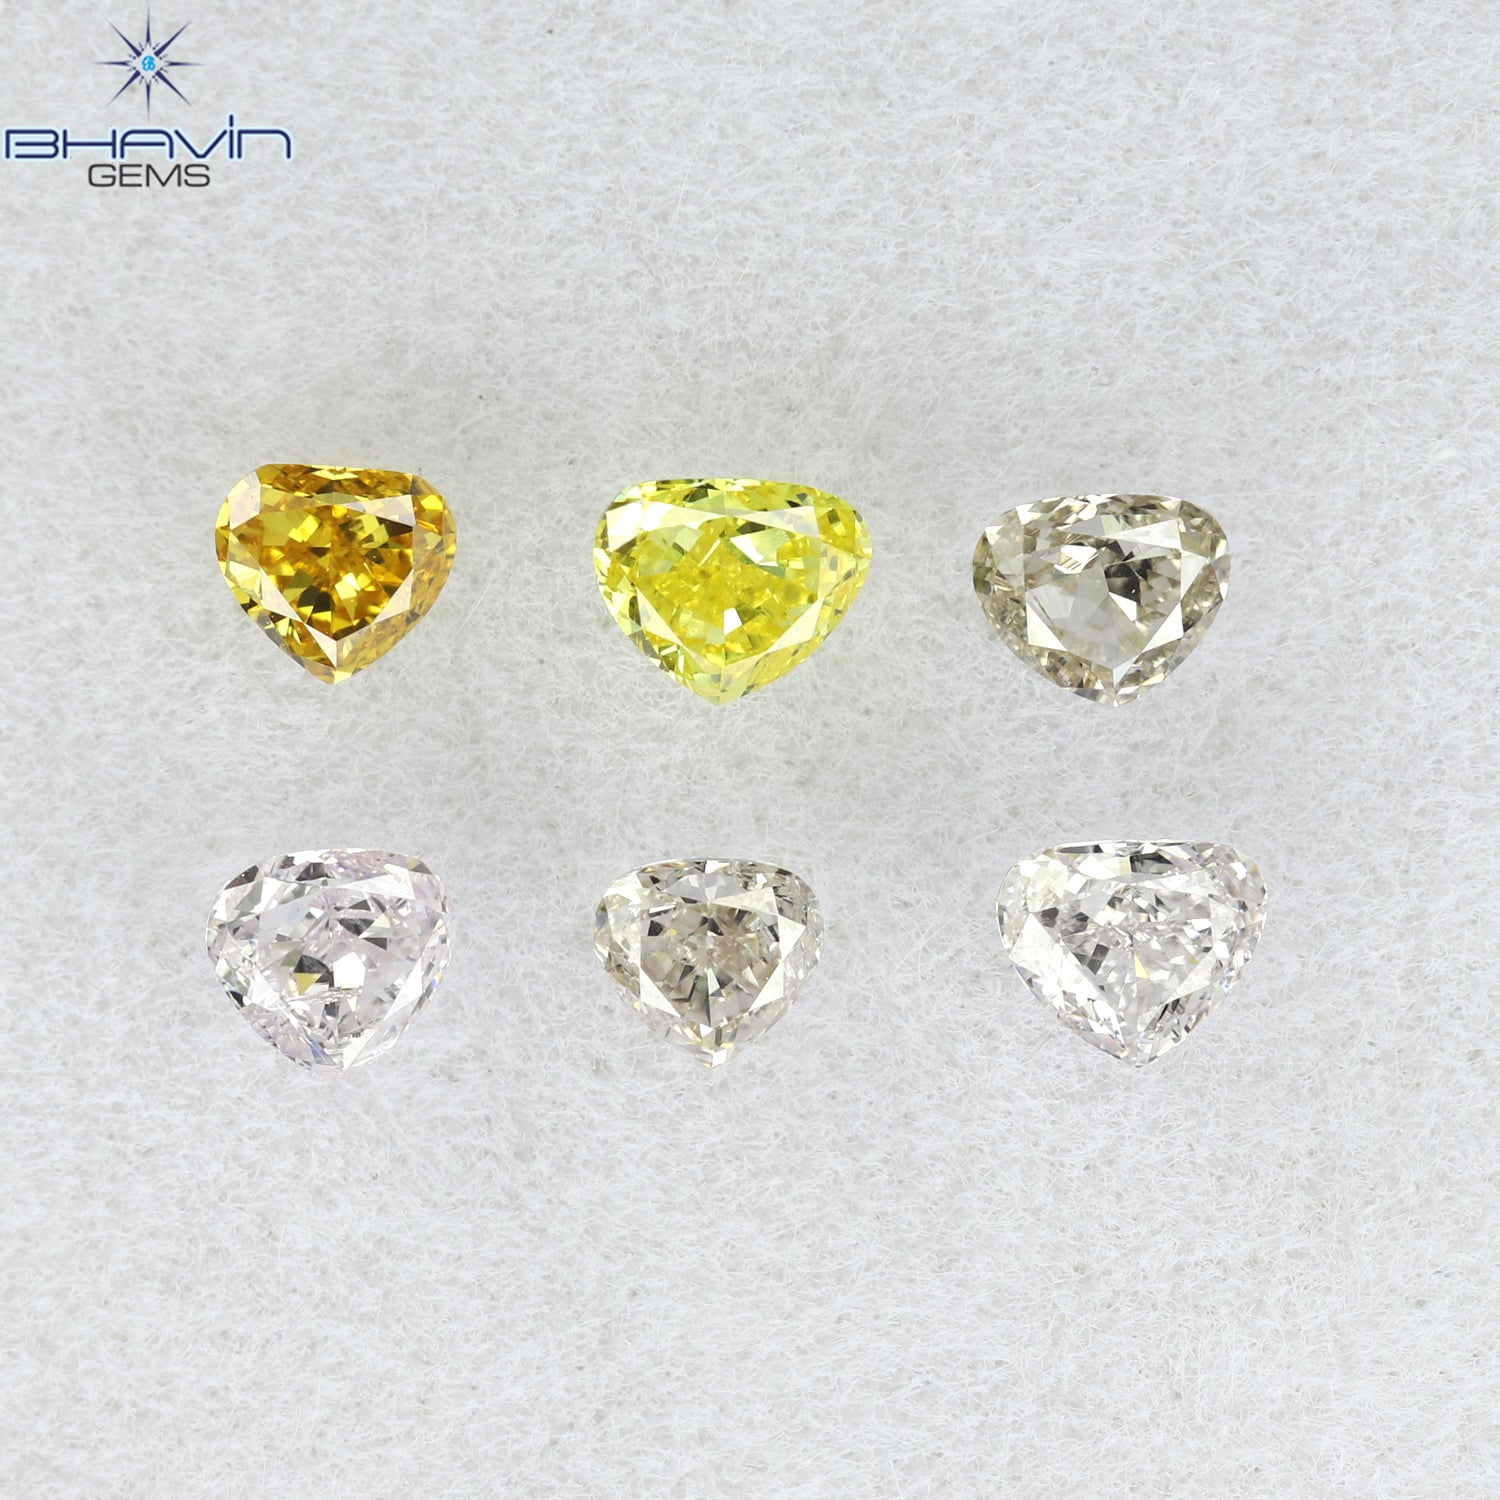 0.51 CT/6 Pcs Heart Shape Natural Diamond Mix Color VS2 Clarity (2.59 MM)